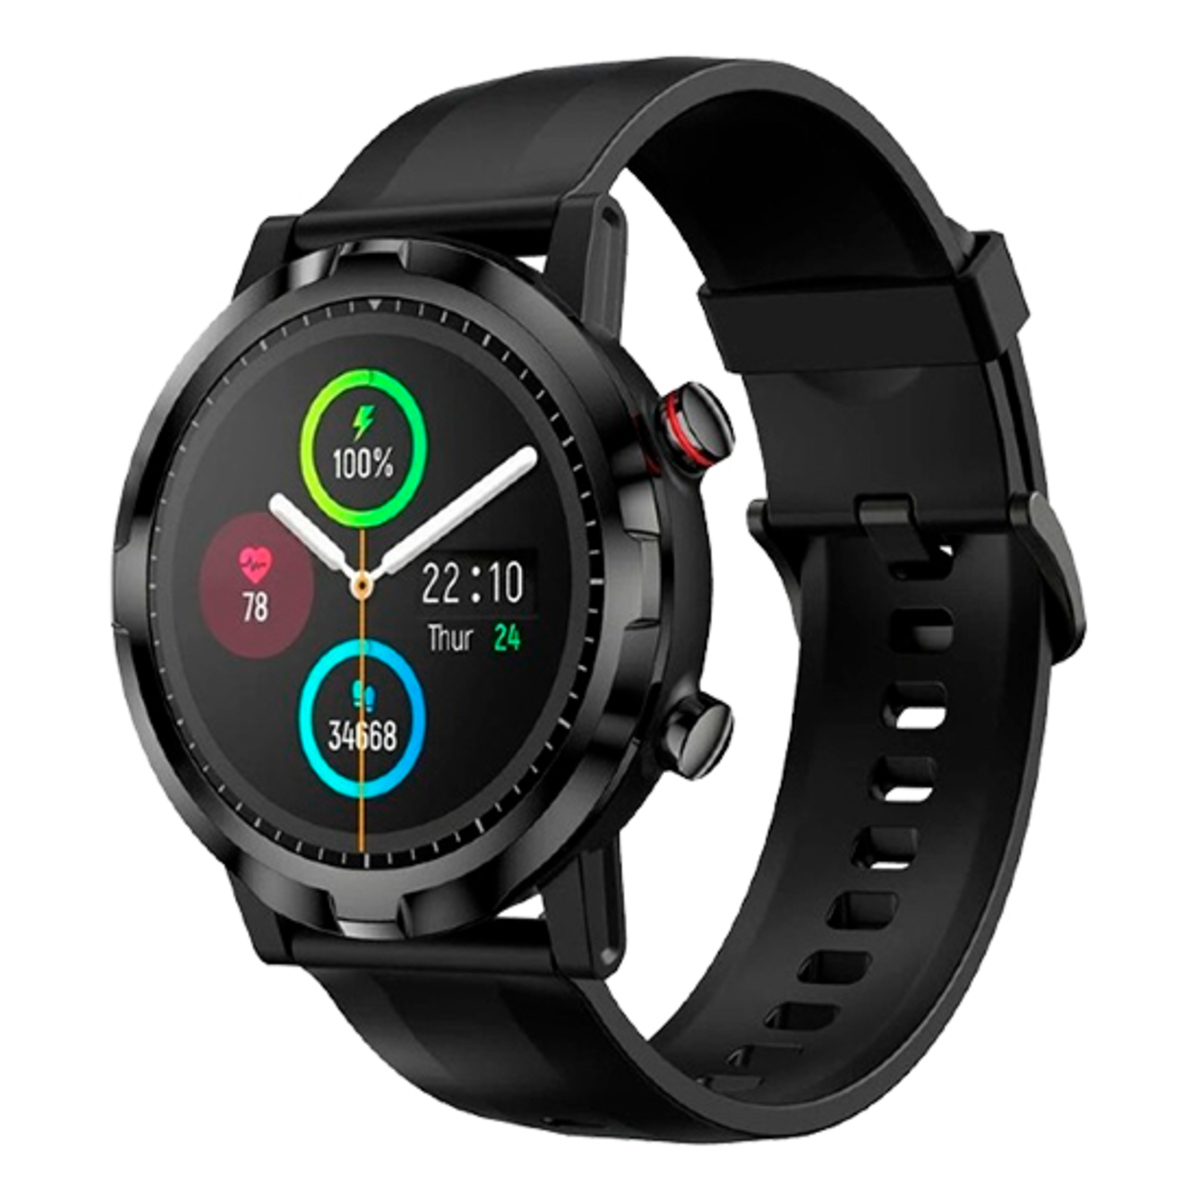 HAYLOU RT LS05S Smartwatch silikon, Schwarz